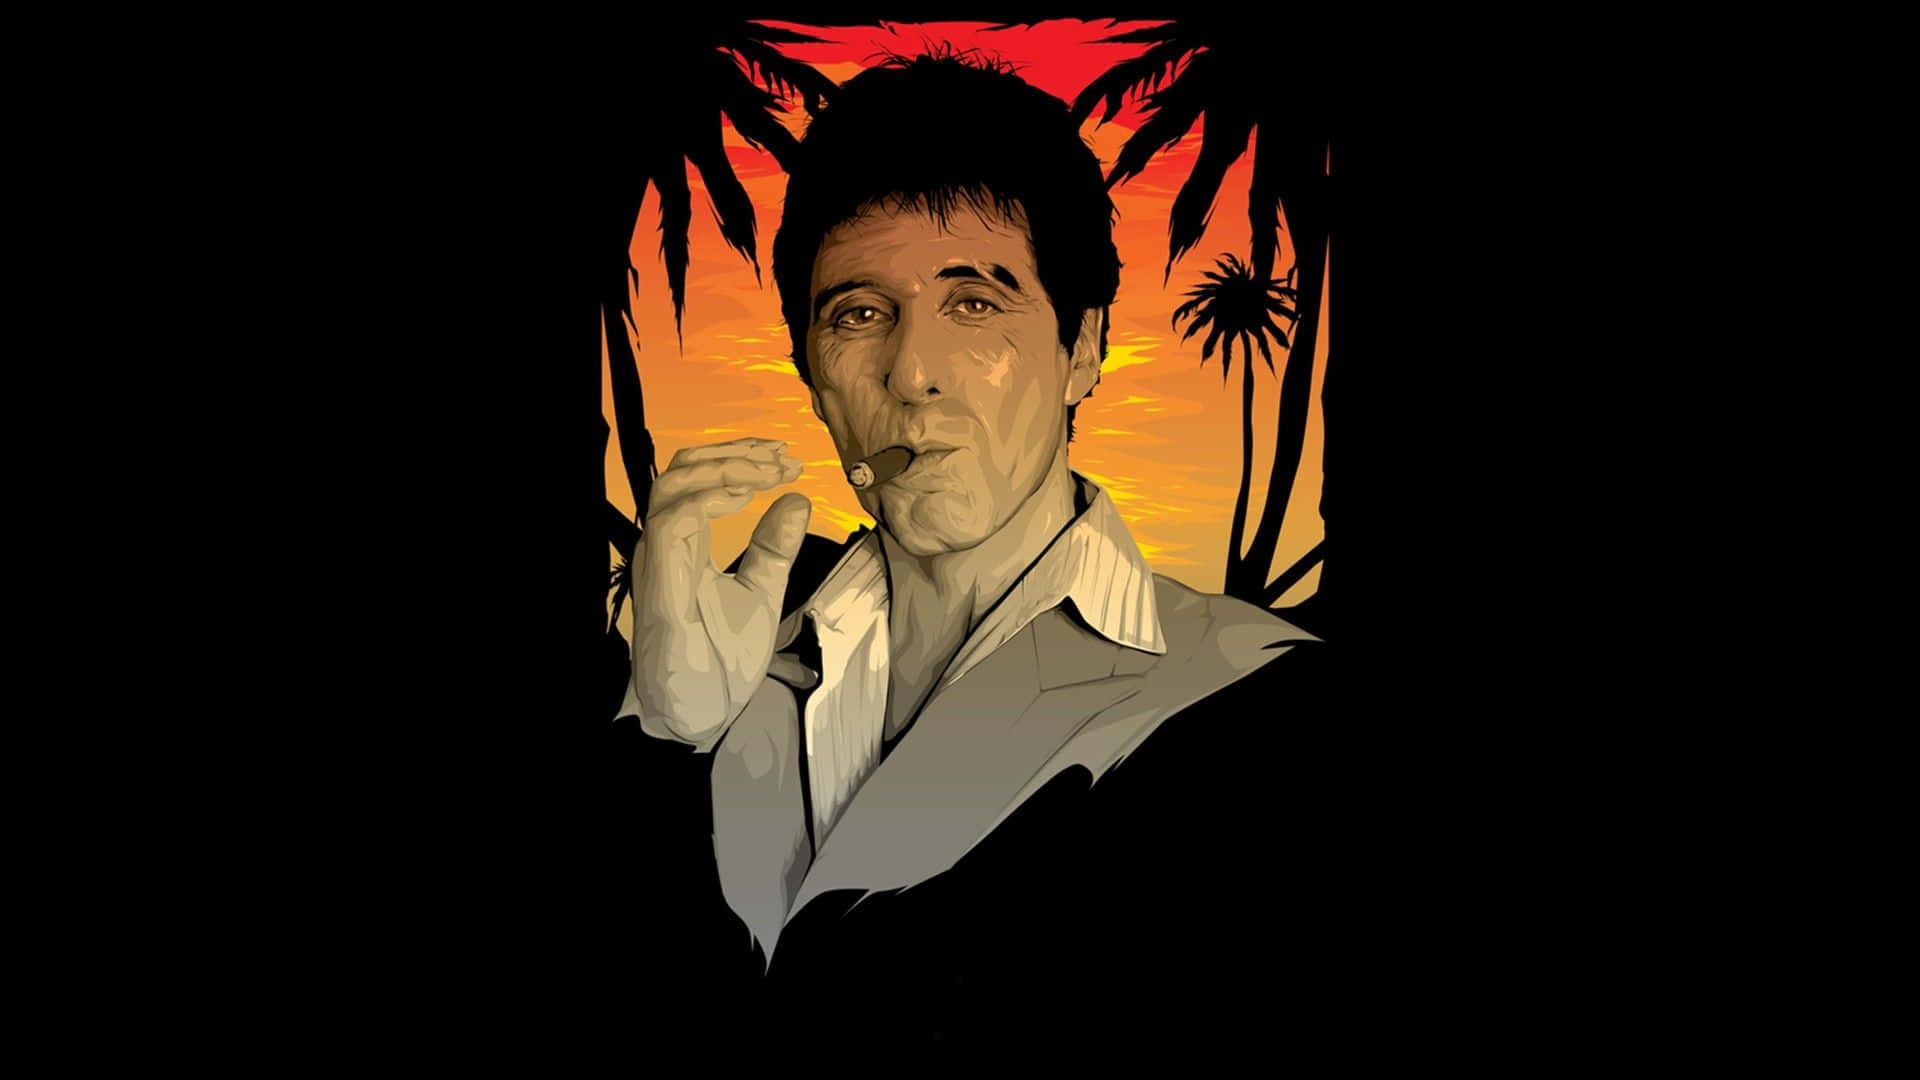 Academy Award-winning Actor Al Pacino